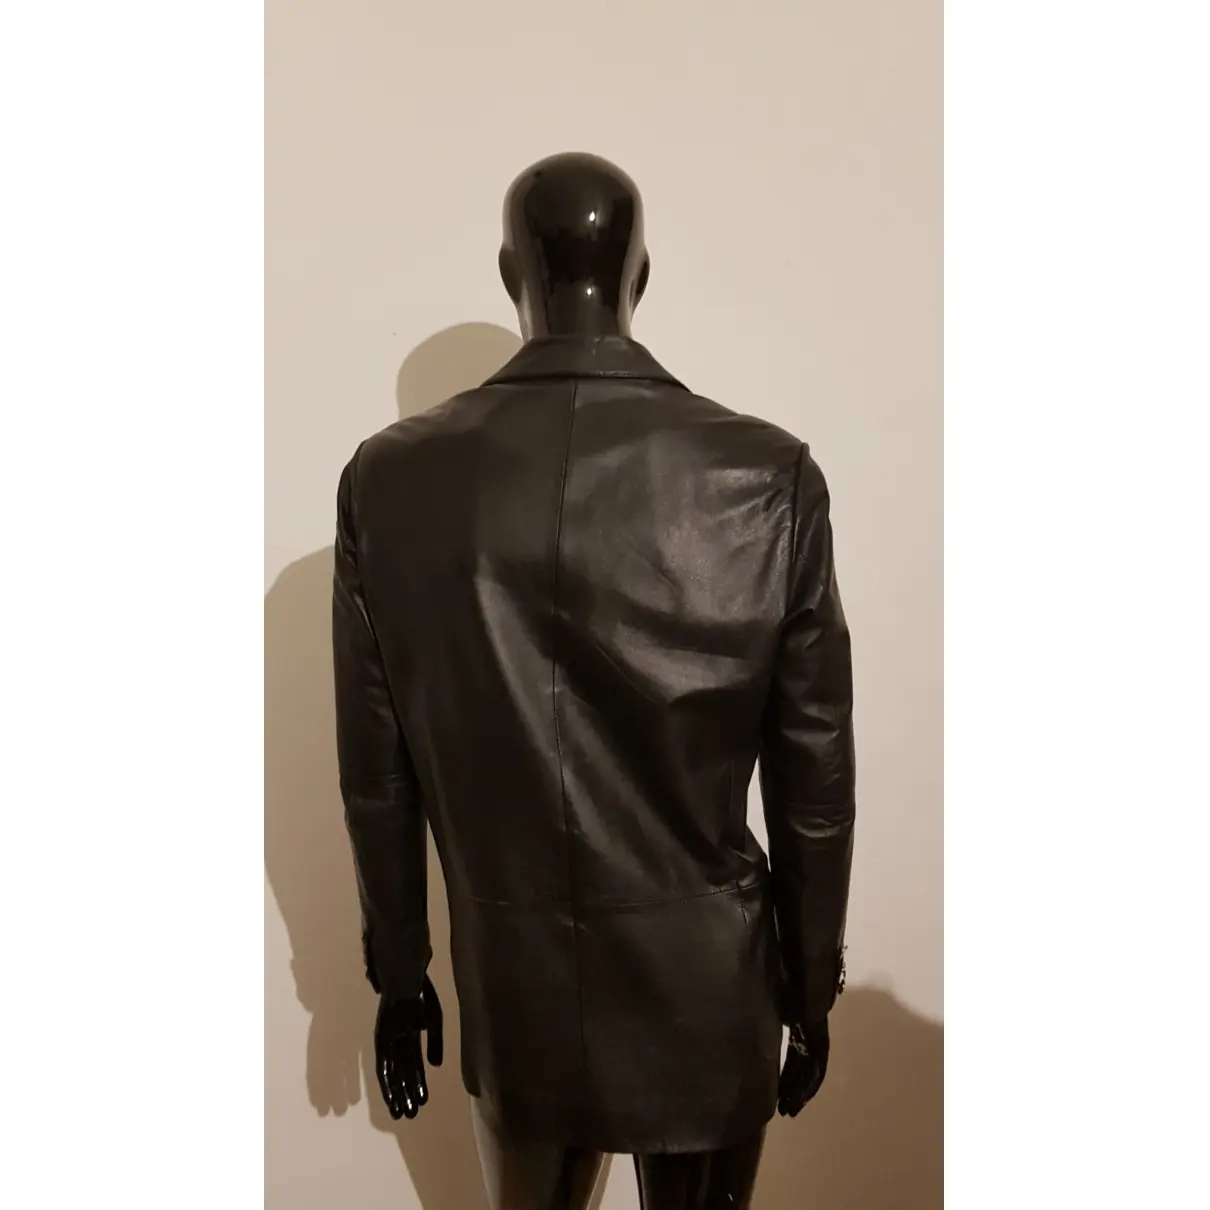 Buy gipsy Leather vest online